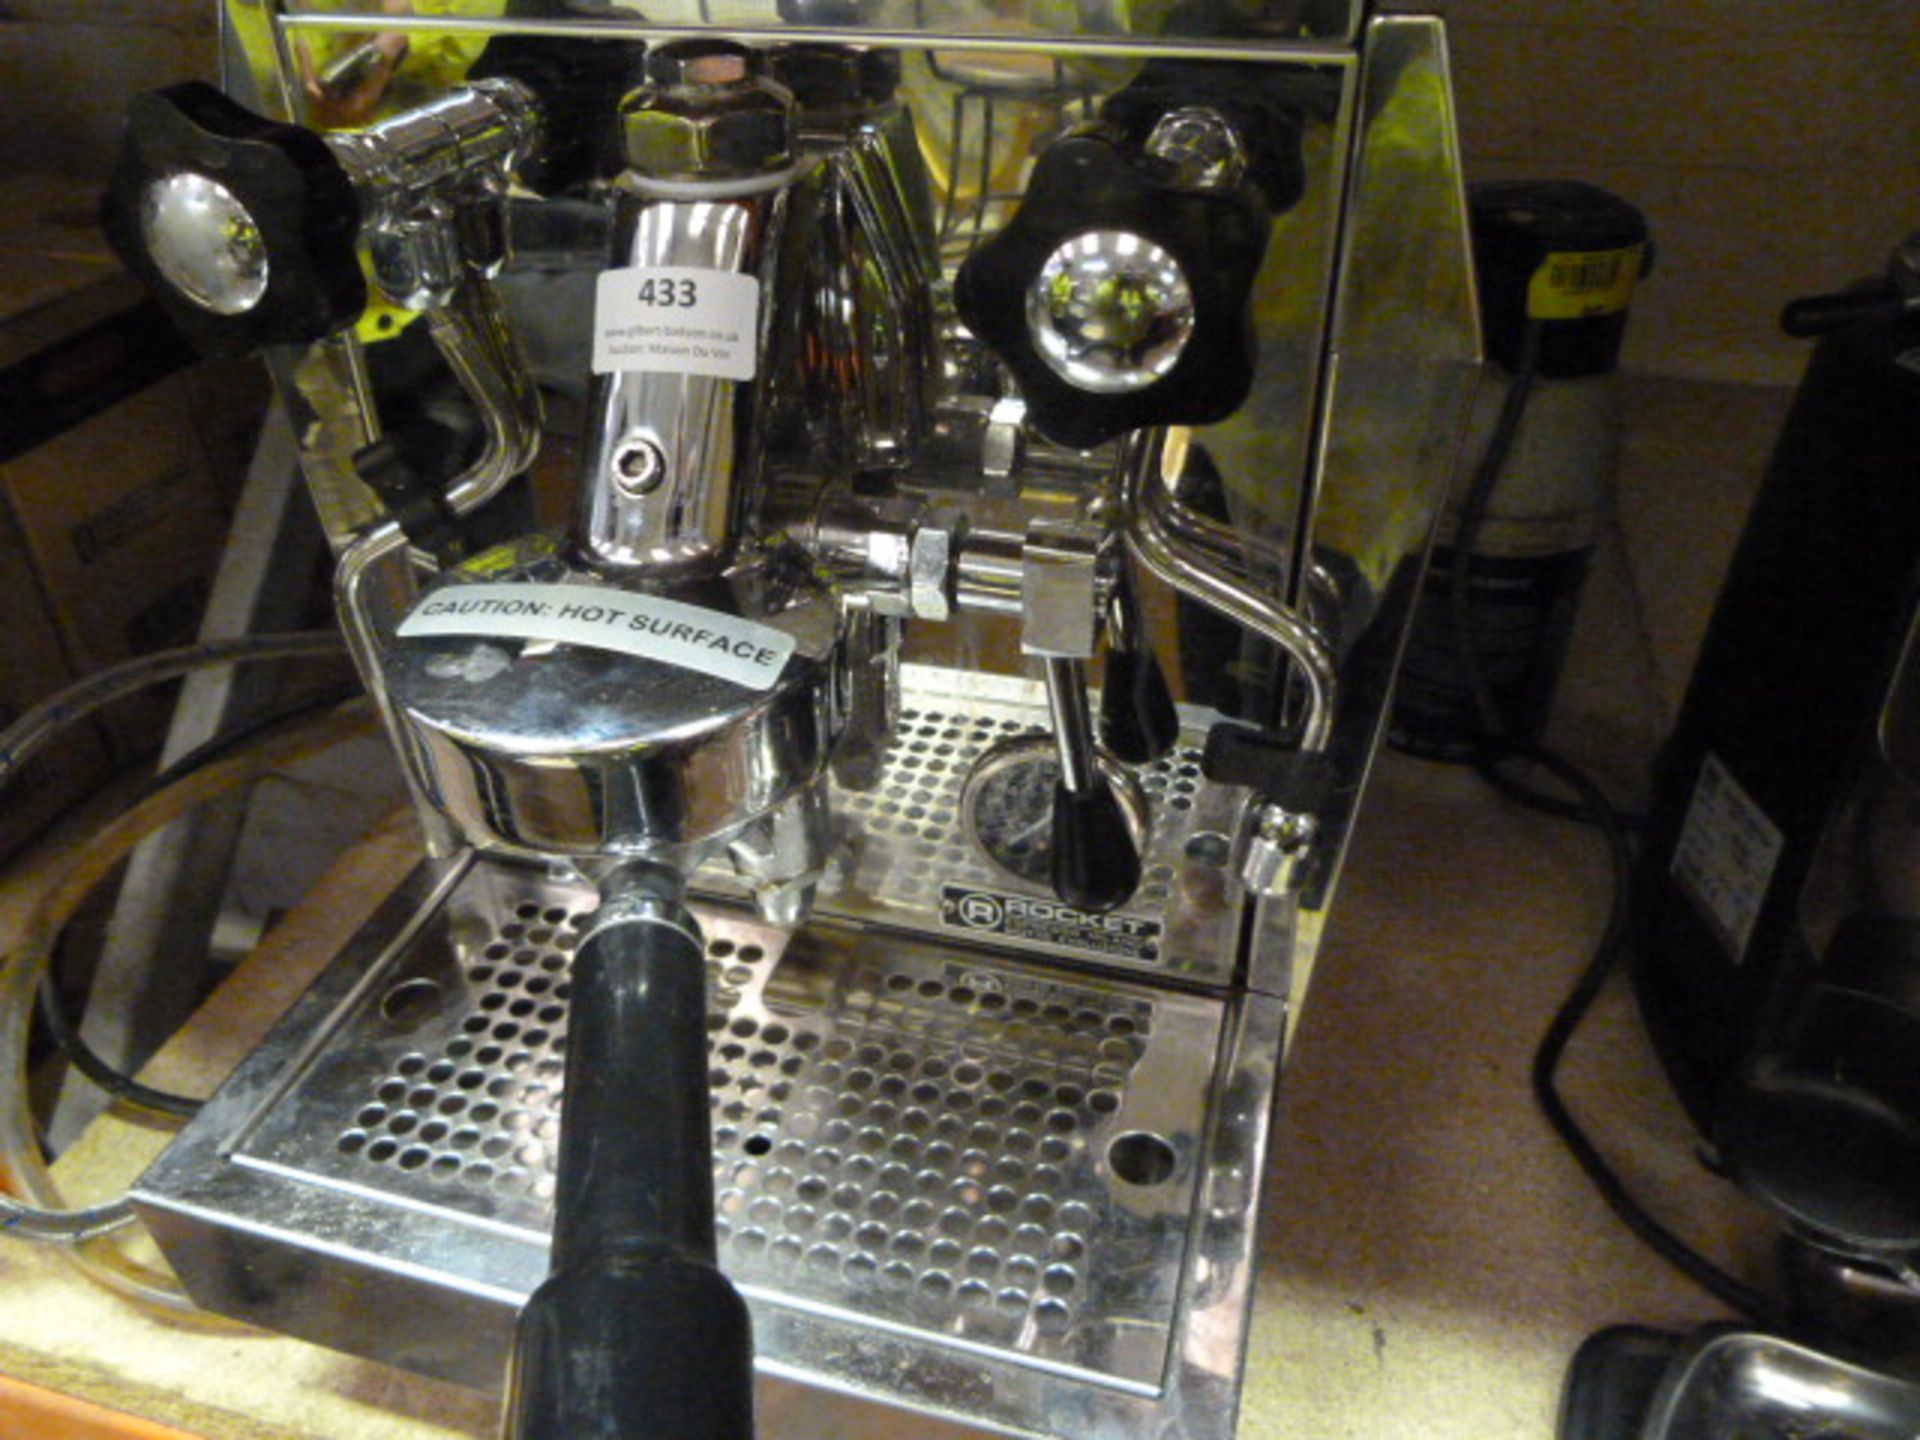 *Rocket Expresso Milano Coffee Machine